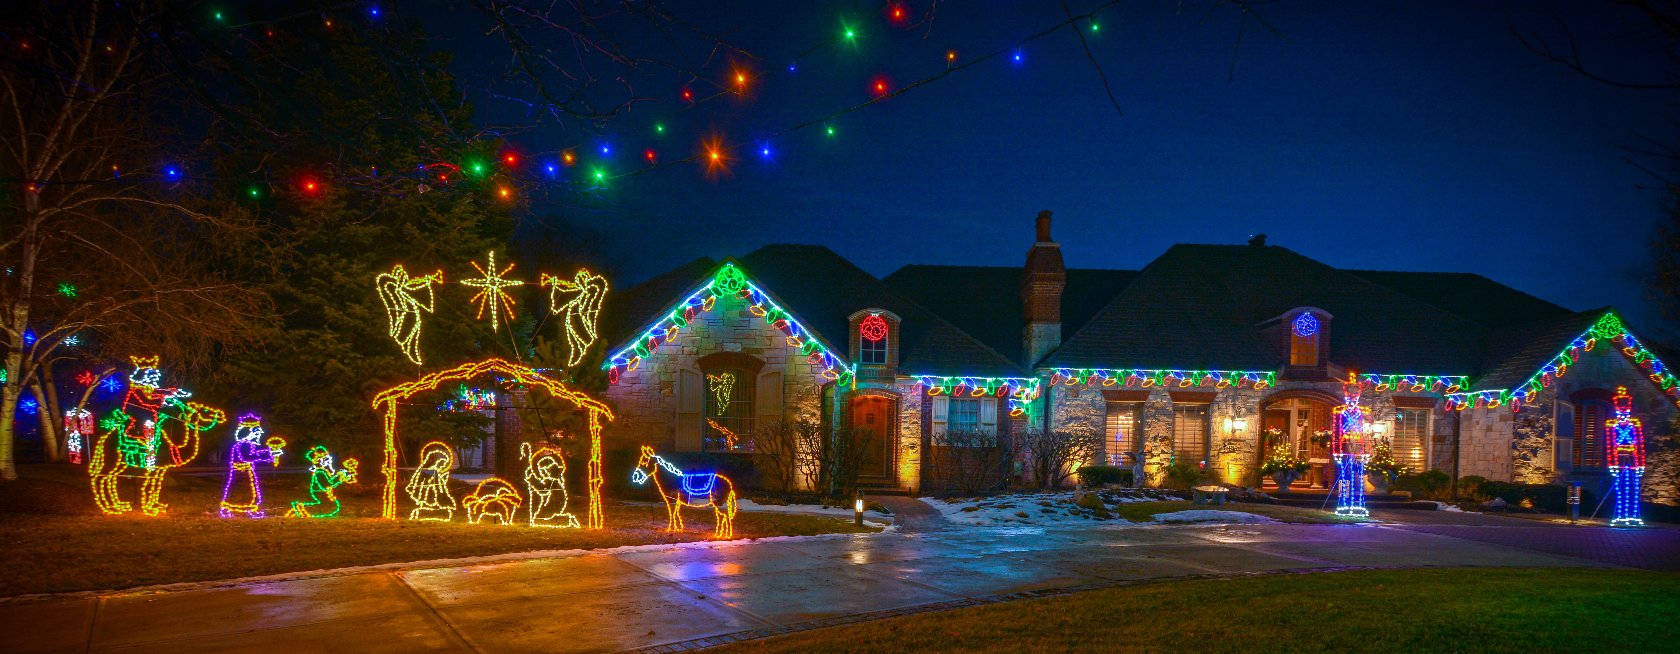 Bulk Christmas Lights, Outdoor Christmas Decorations, Holiday Lighting -  Brite Ideas Decorating